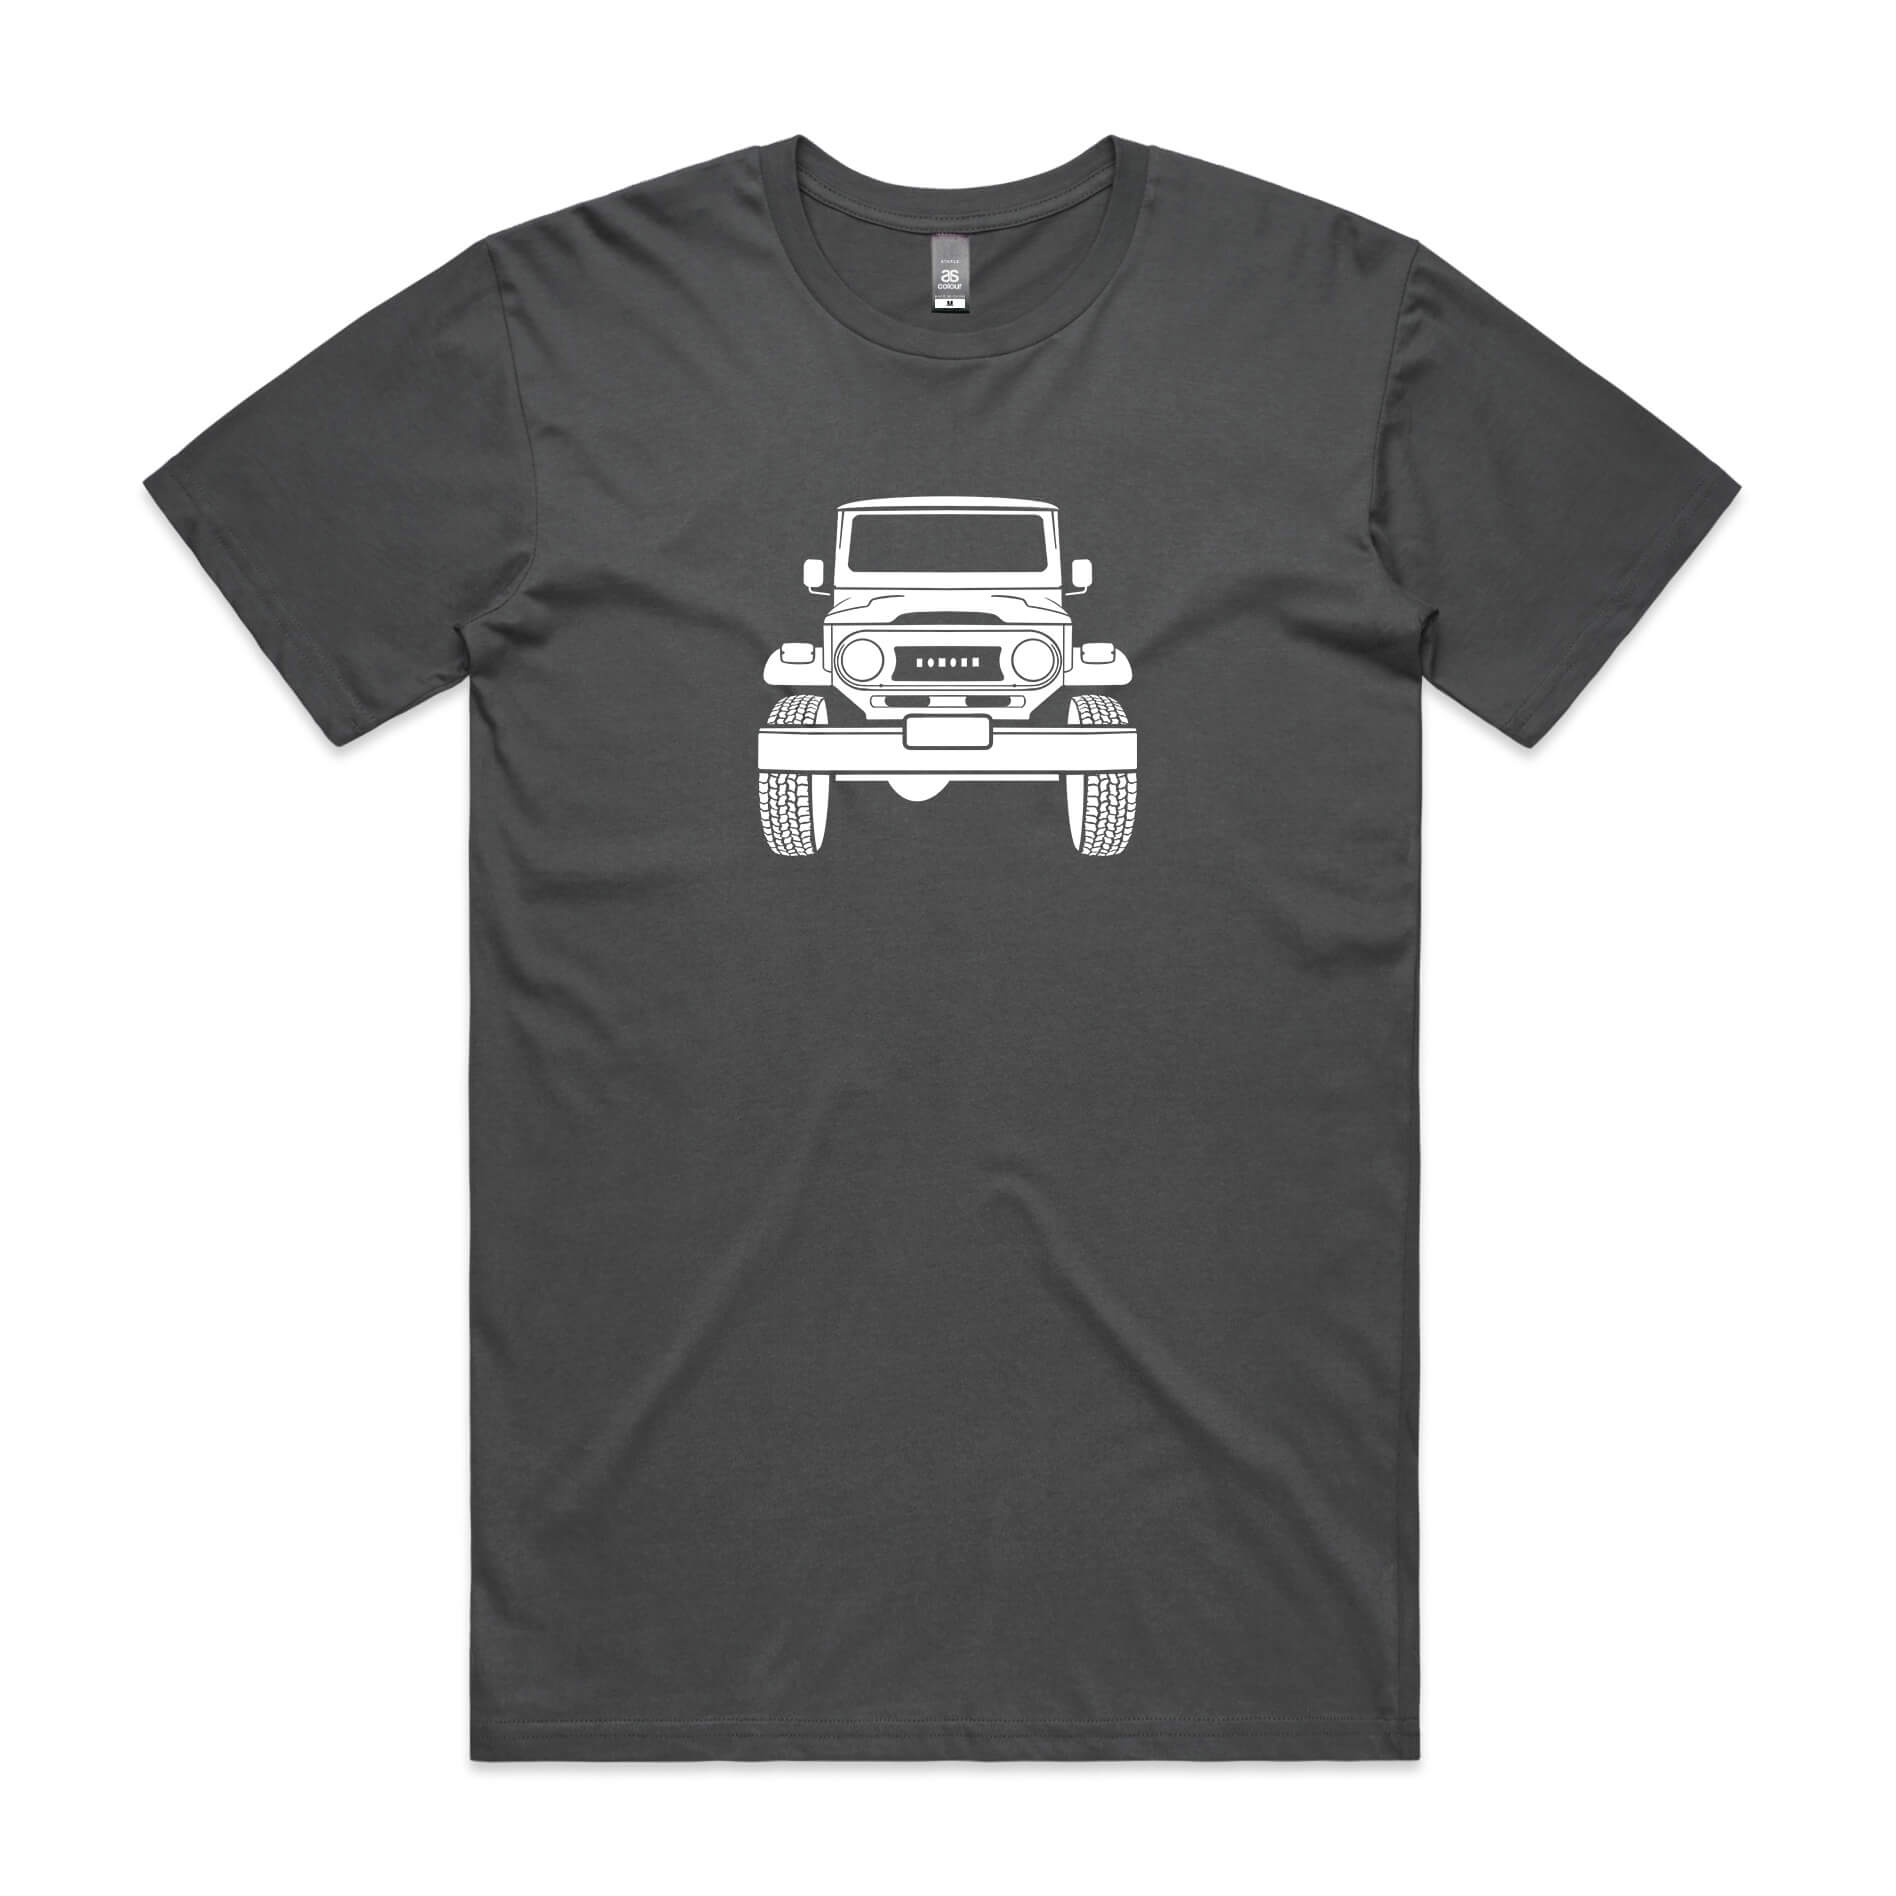 Toyota LandCruiser FJ40 t-shirt in charcoal grey